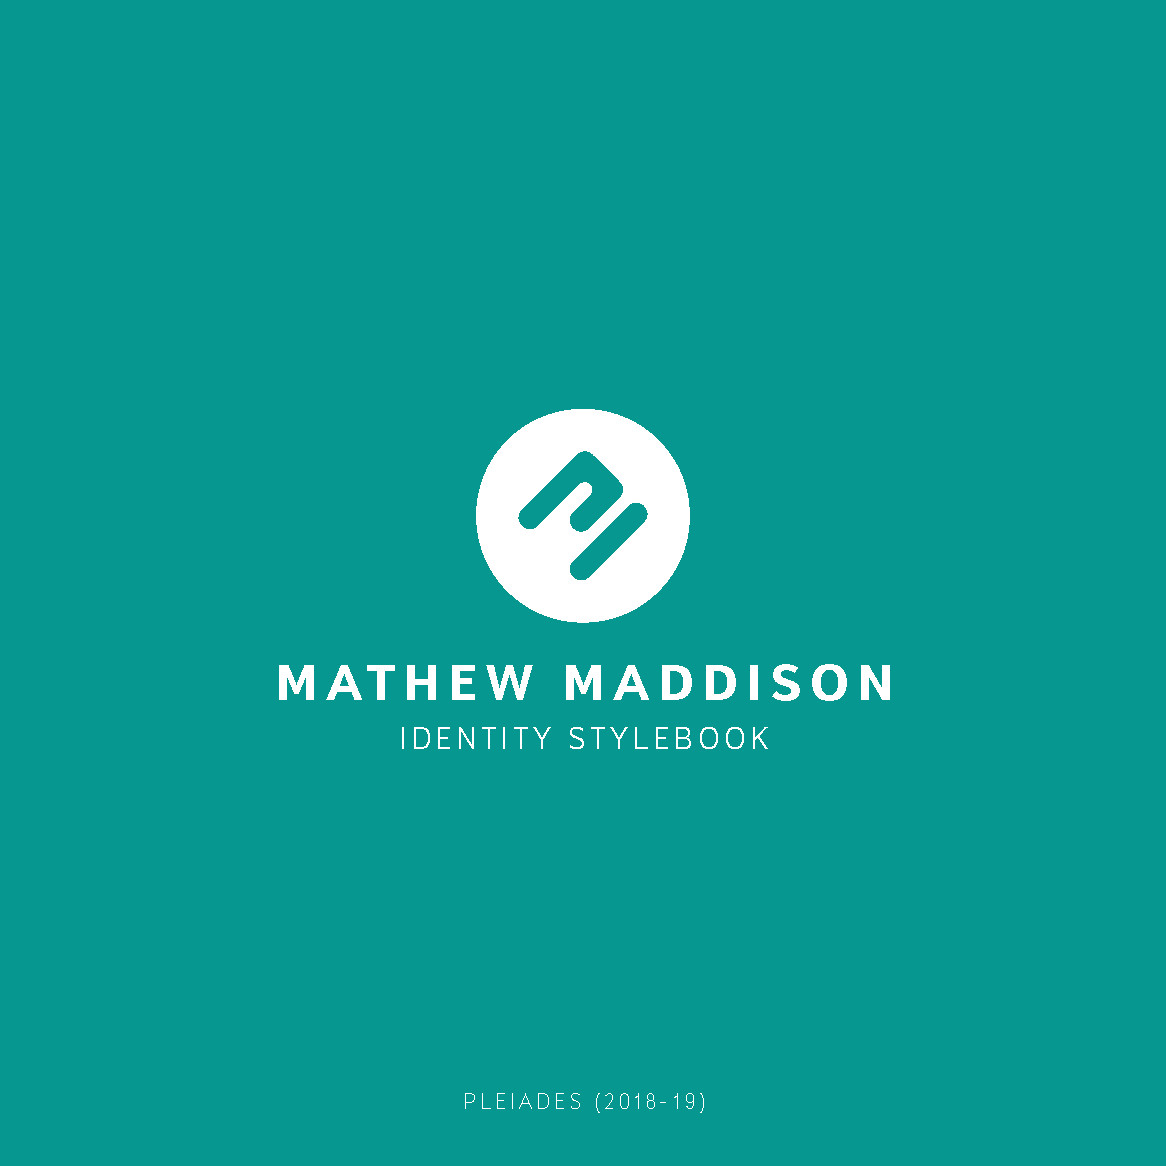 Mathew Maddison - Branding 2018-19 "Pleiades"